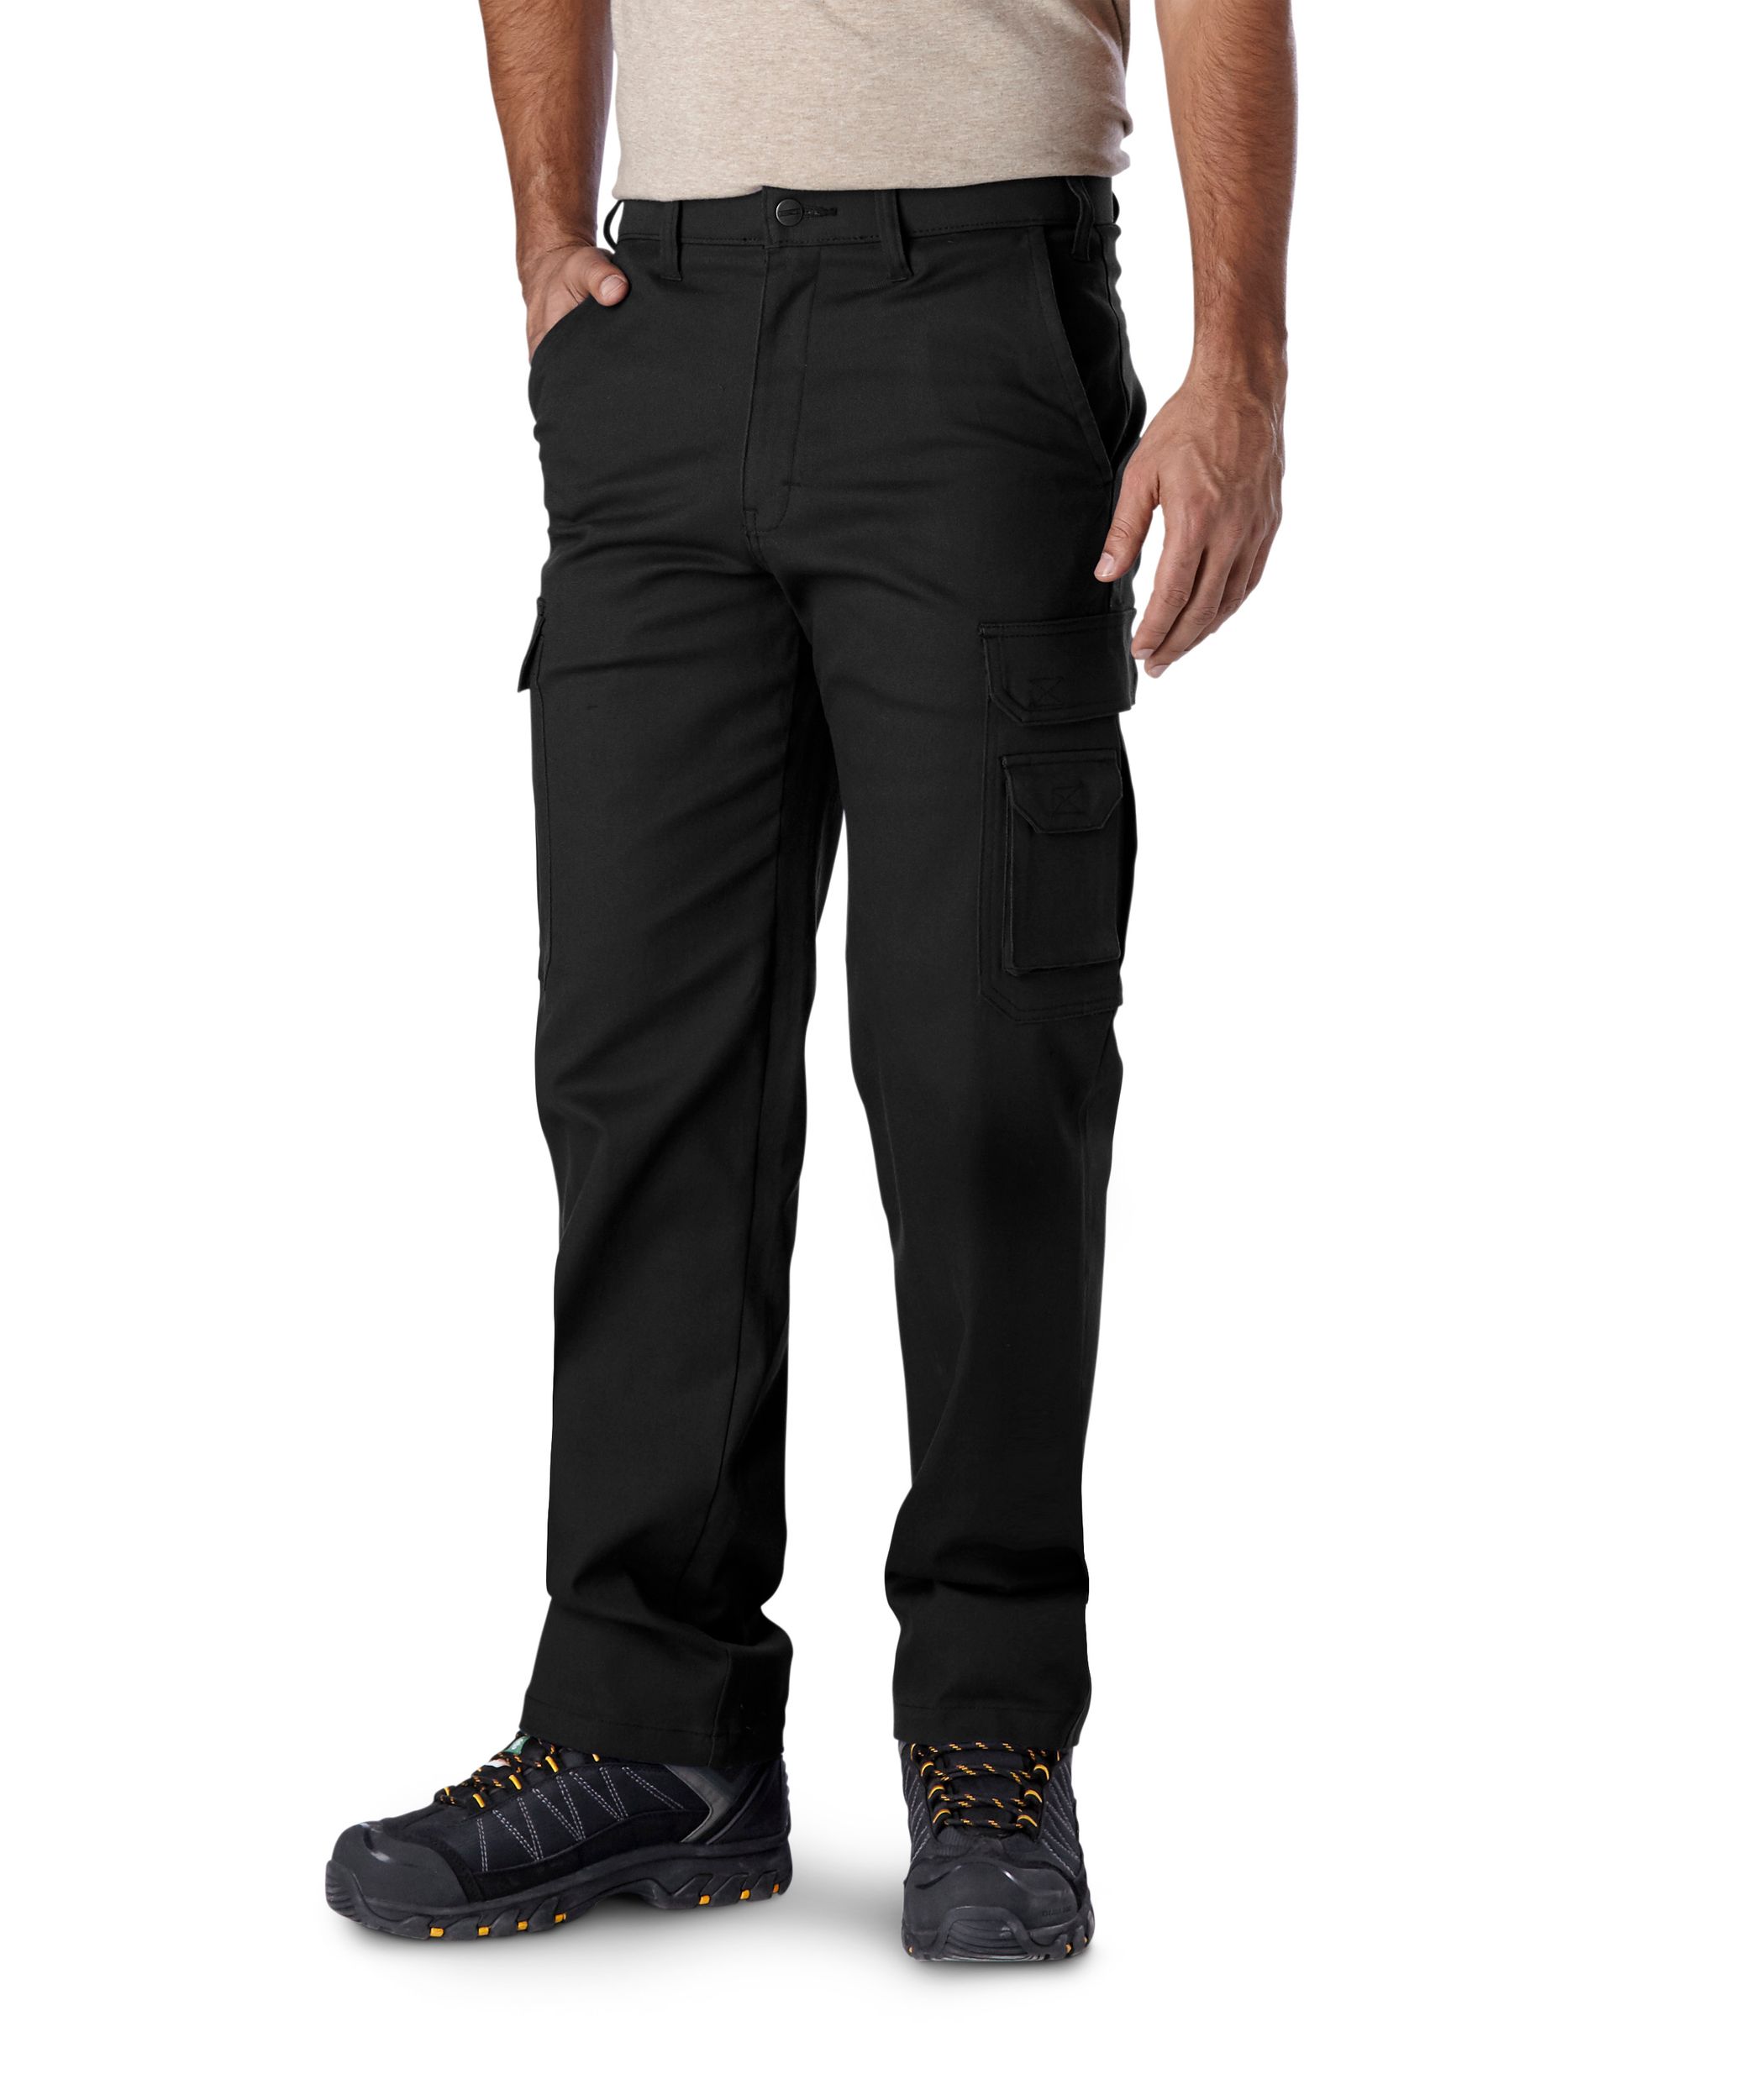 Mens Stretch Work Trouser with Cordura Knee Pad Pockets Workwear Pro Pants  Black | eBay